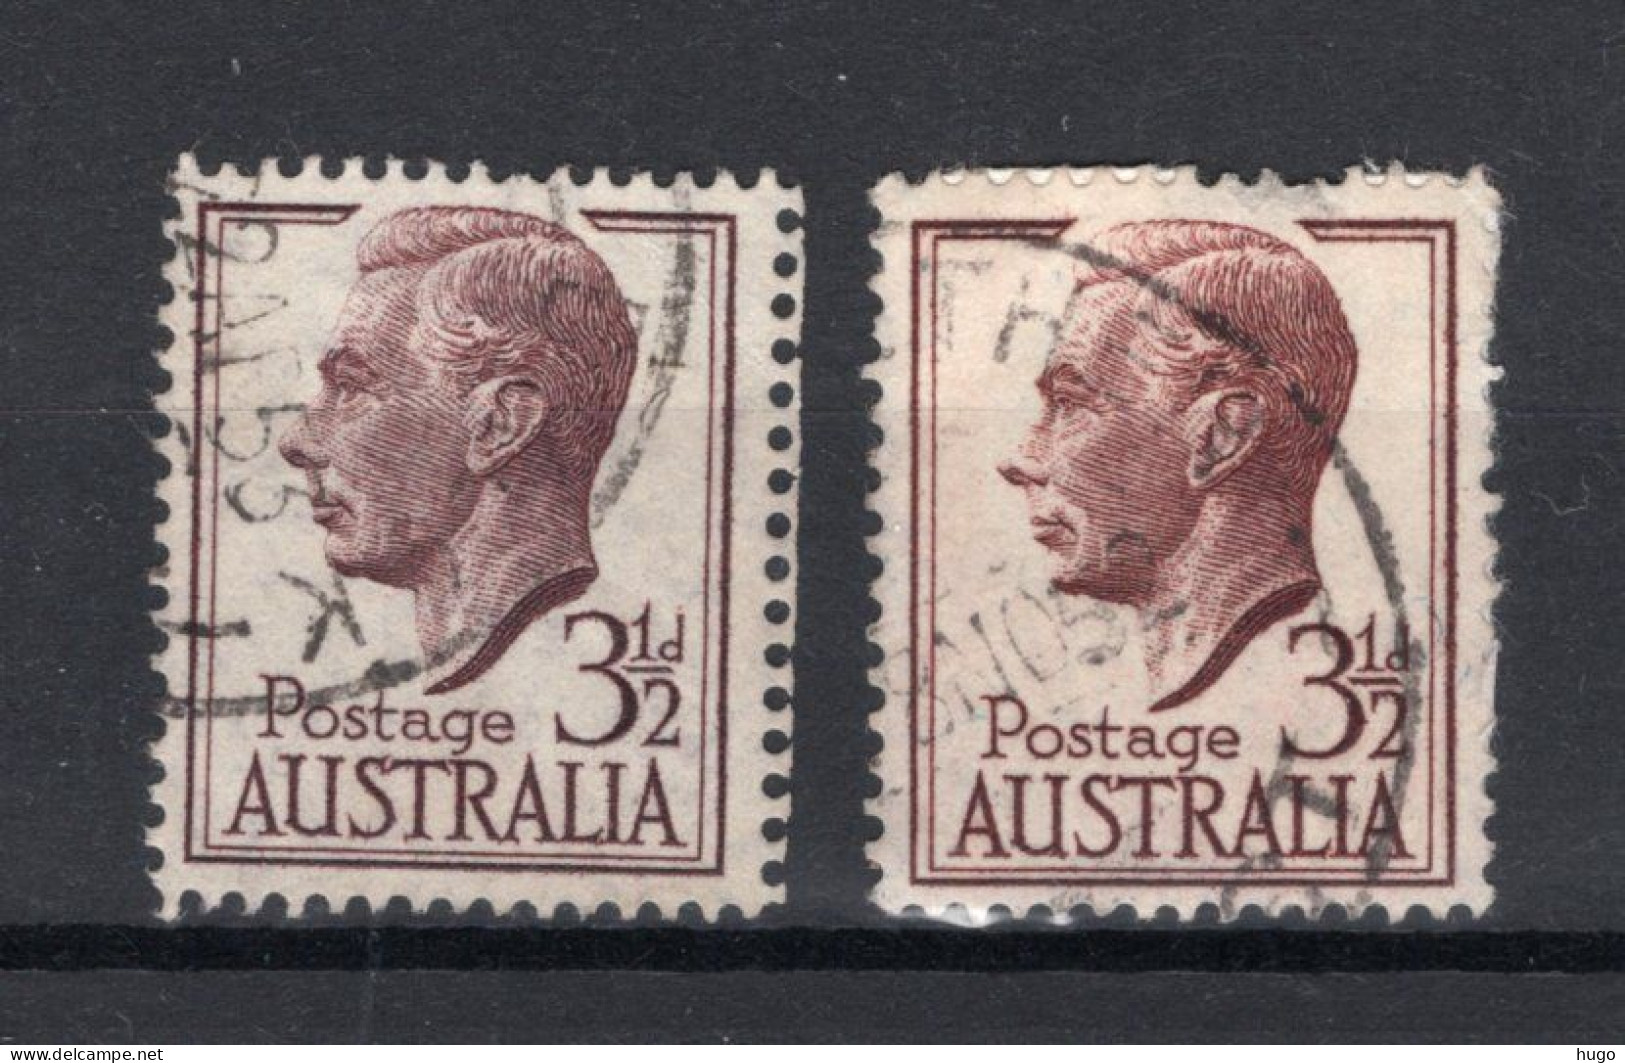 AUSTRALIA Yt. 183° Gestempeld 1951-1952 - Usados